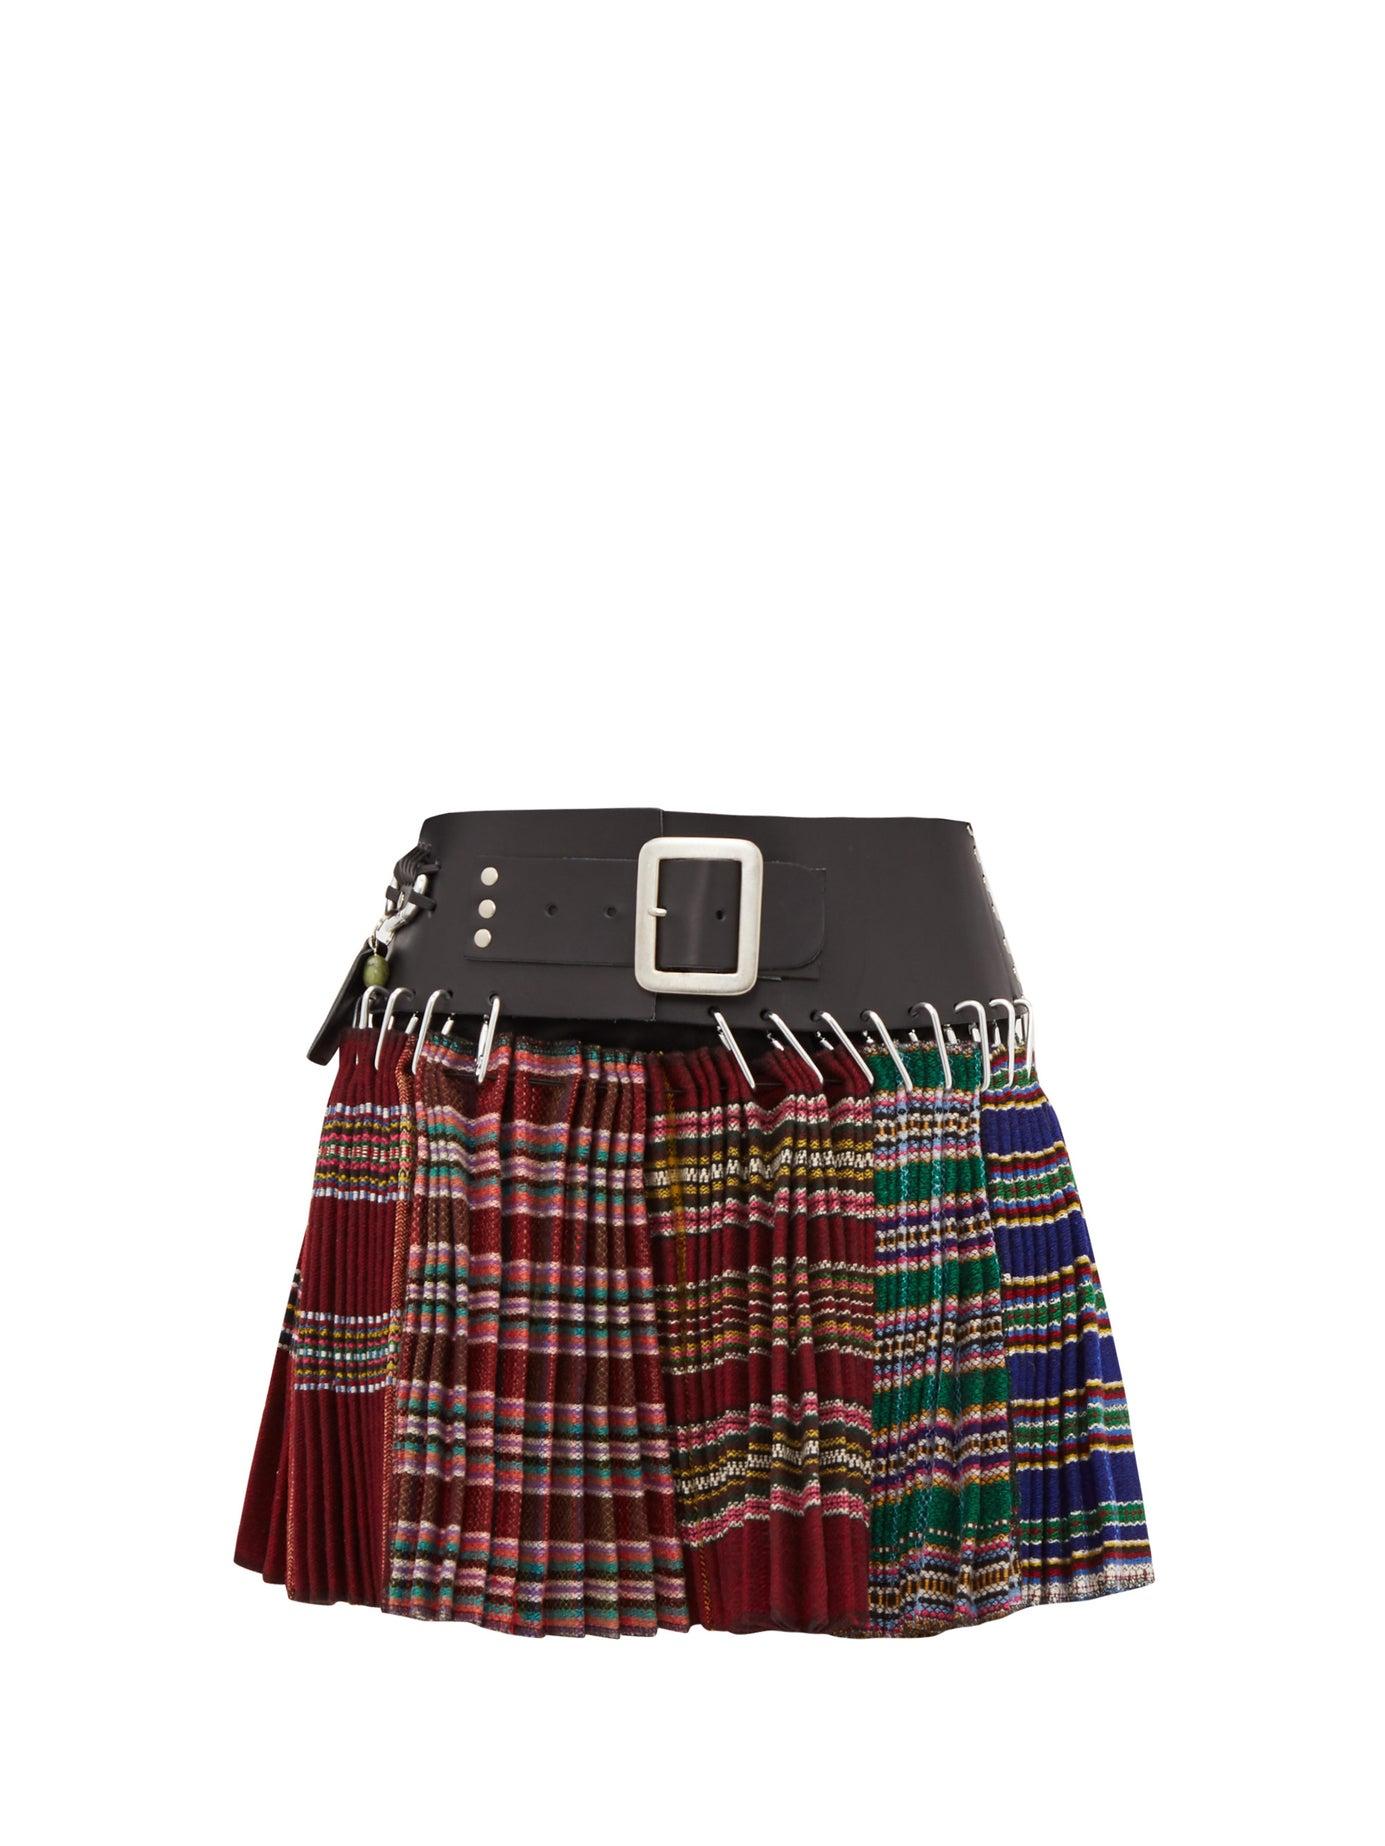 Chopova Lowena Pleated Recycled Wool-jacquard Mini Skirt in Red - Lyst